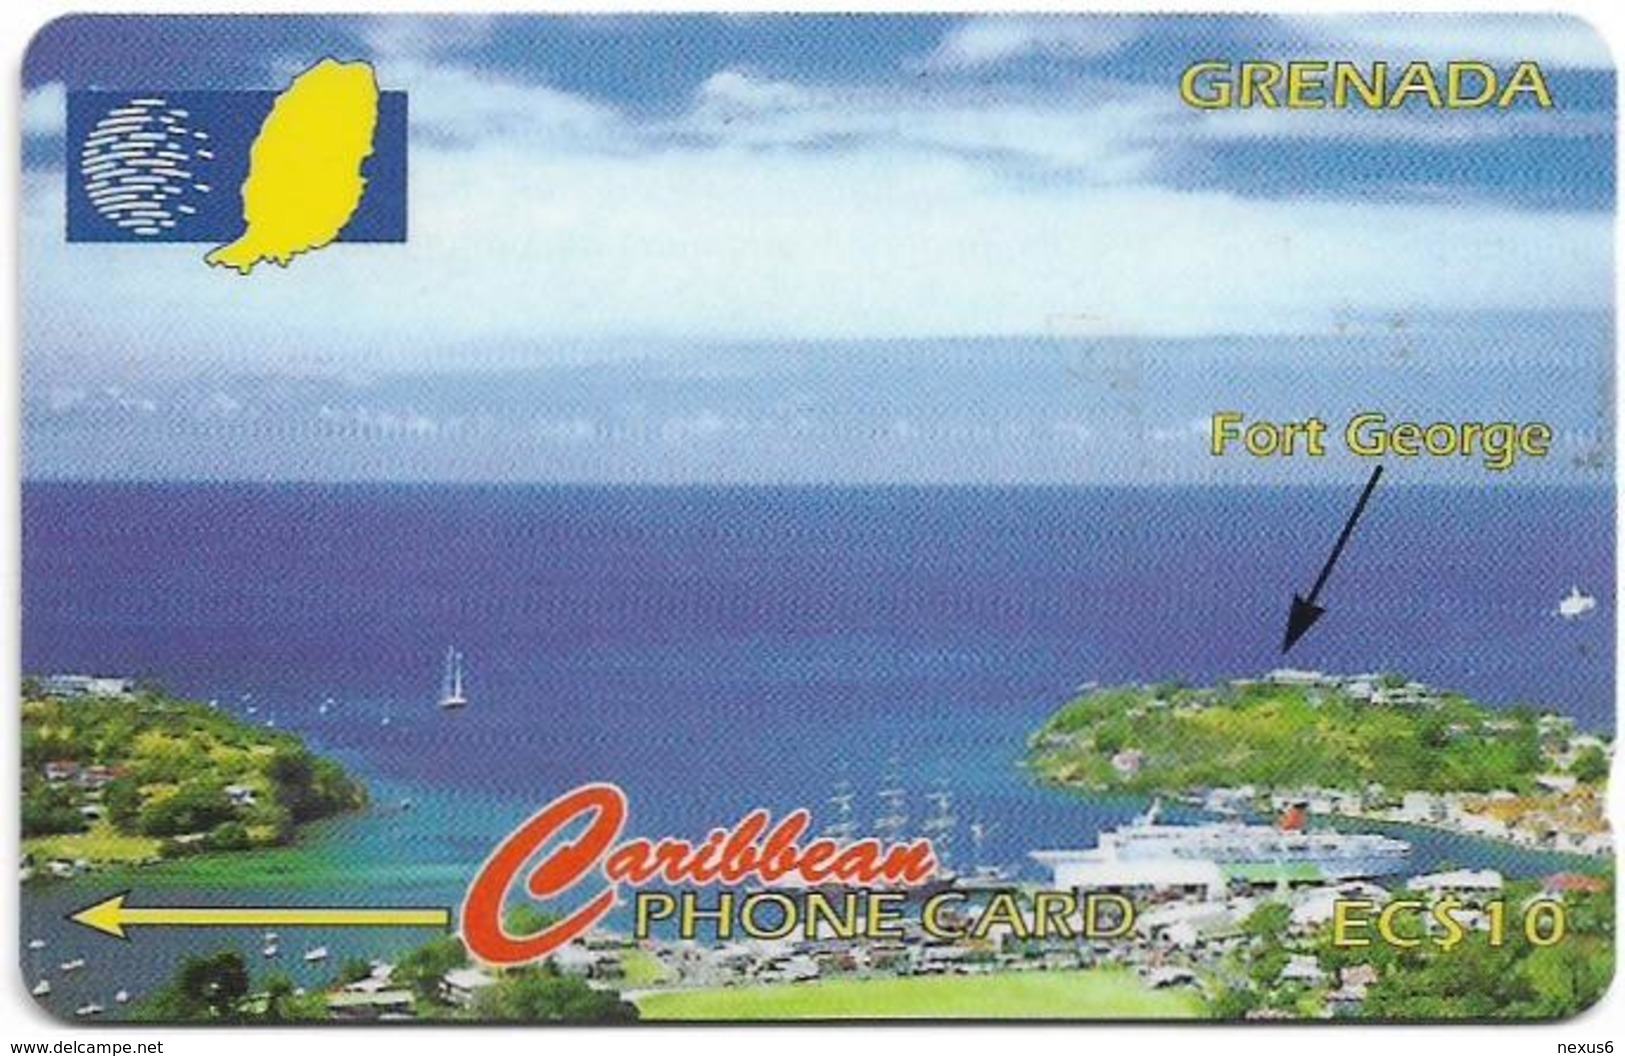 Grenada - C&W (GPT) - Fort George, 51CGRB, 1996, 16.000ex, Used - Grenade